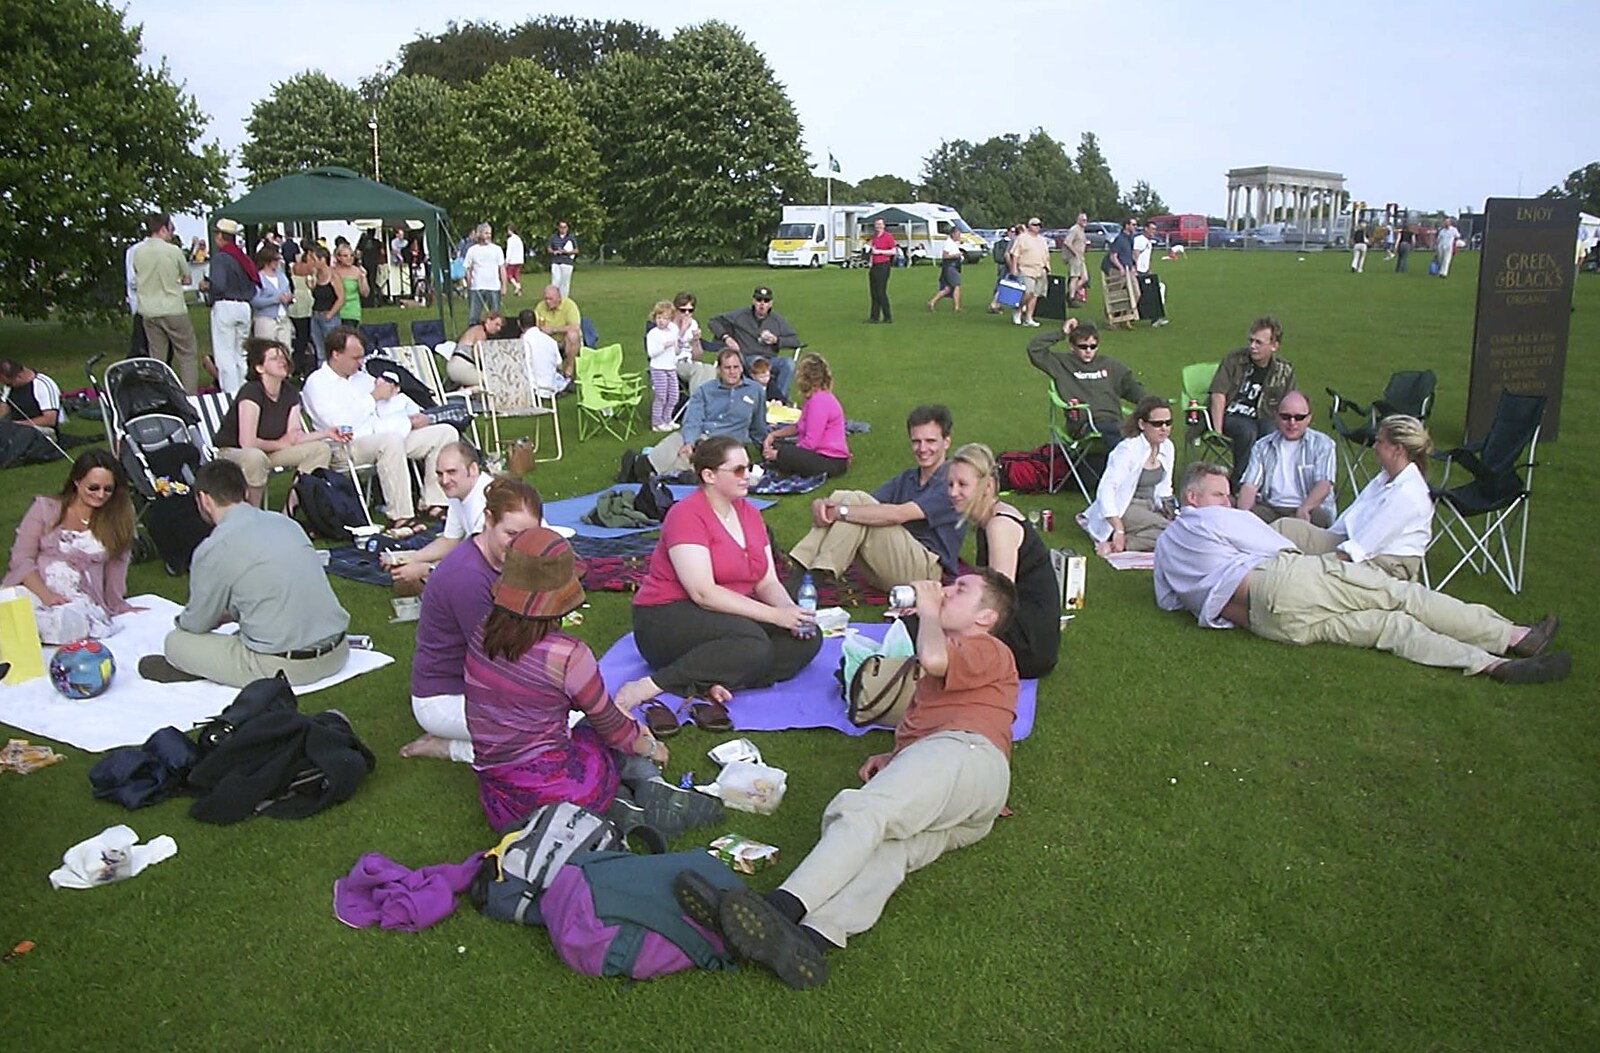 3G Lab at Jools Holland, Audley End, Saffron Walden, Essex - 25th July 2004: We lounge around in the sun